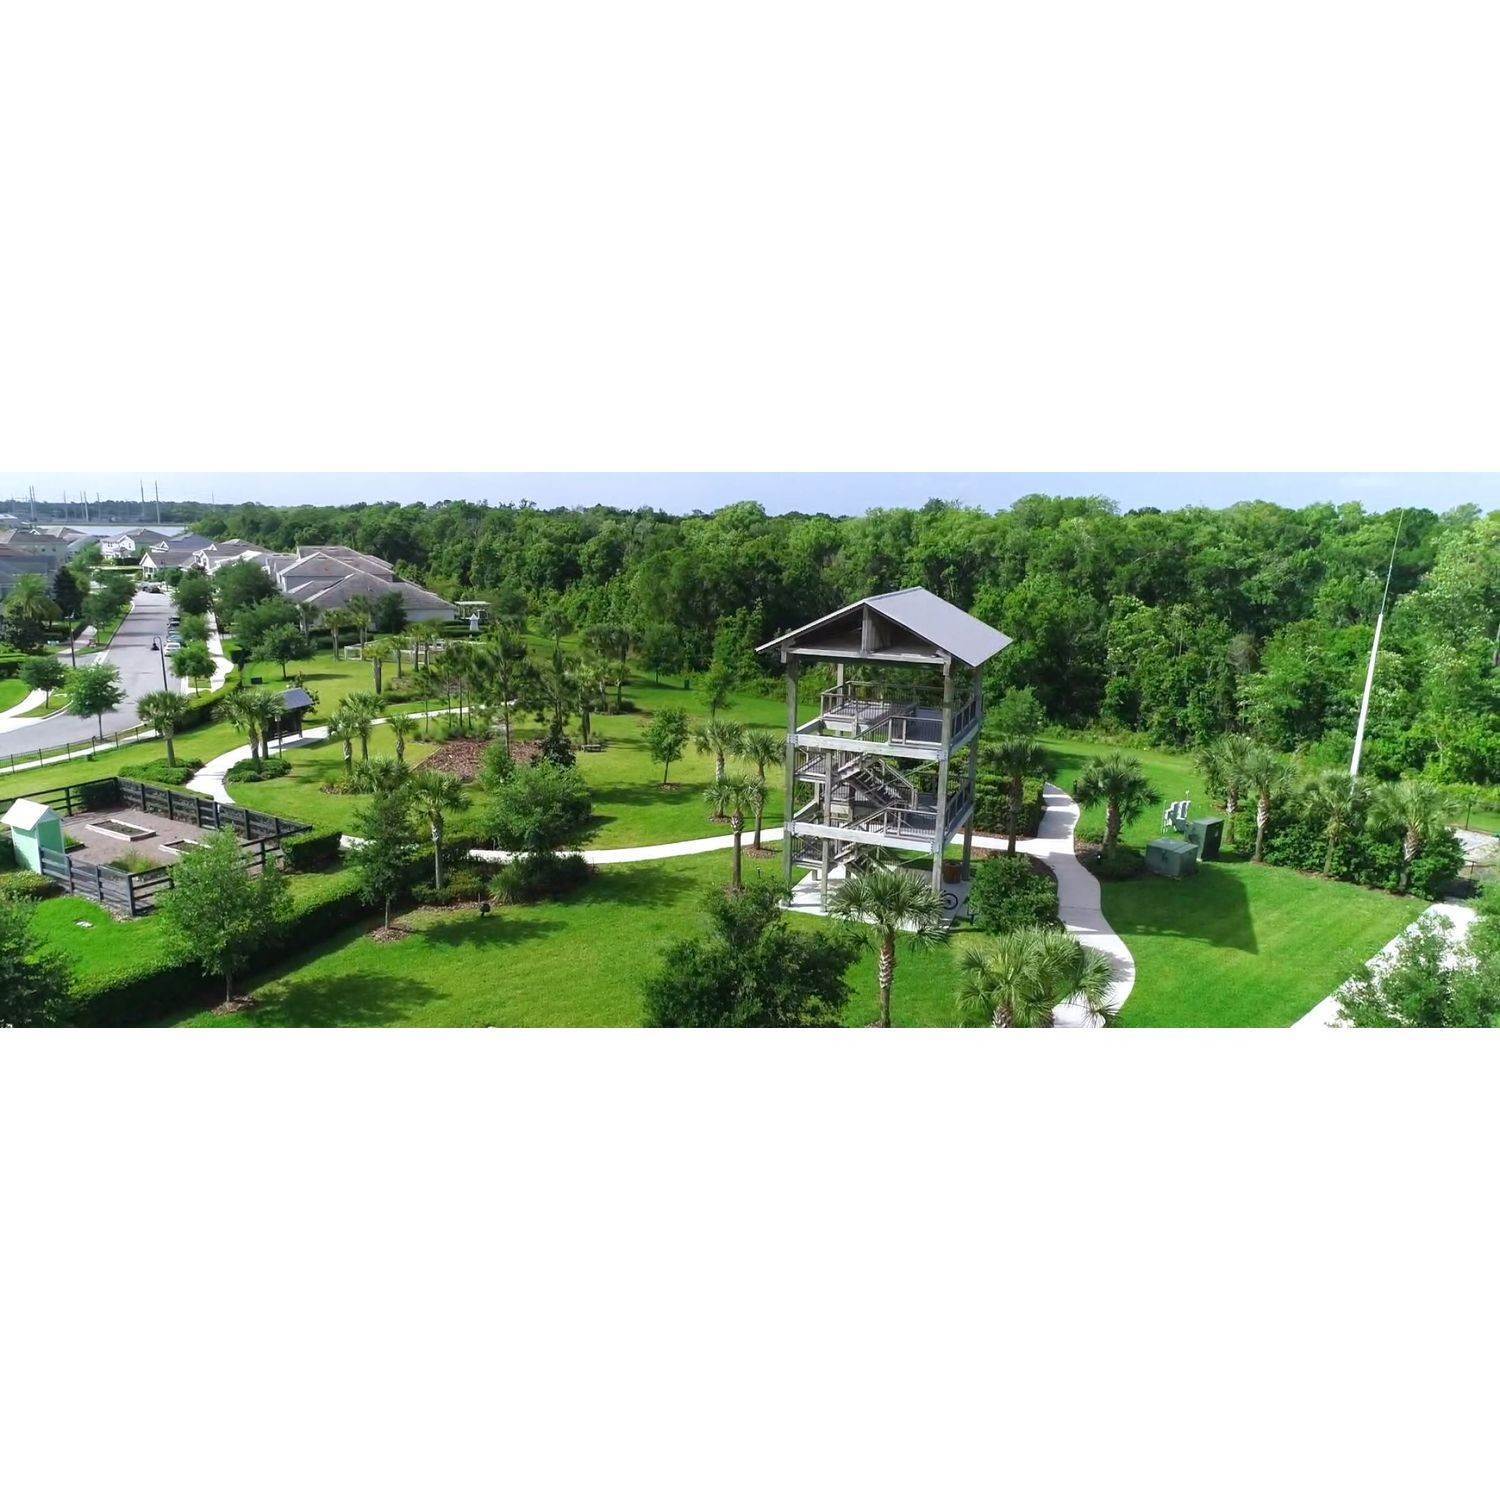 3. Storey Park - Innovation Estate Collection building at 10914 History Avenue, Orlando, FL 32832